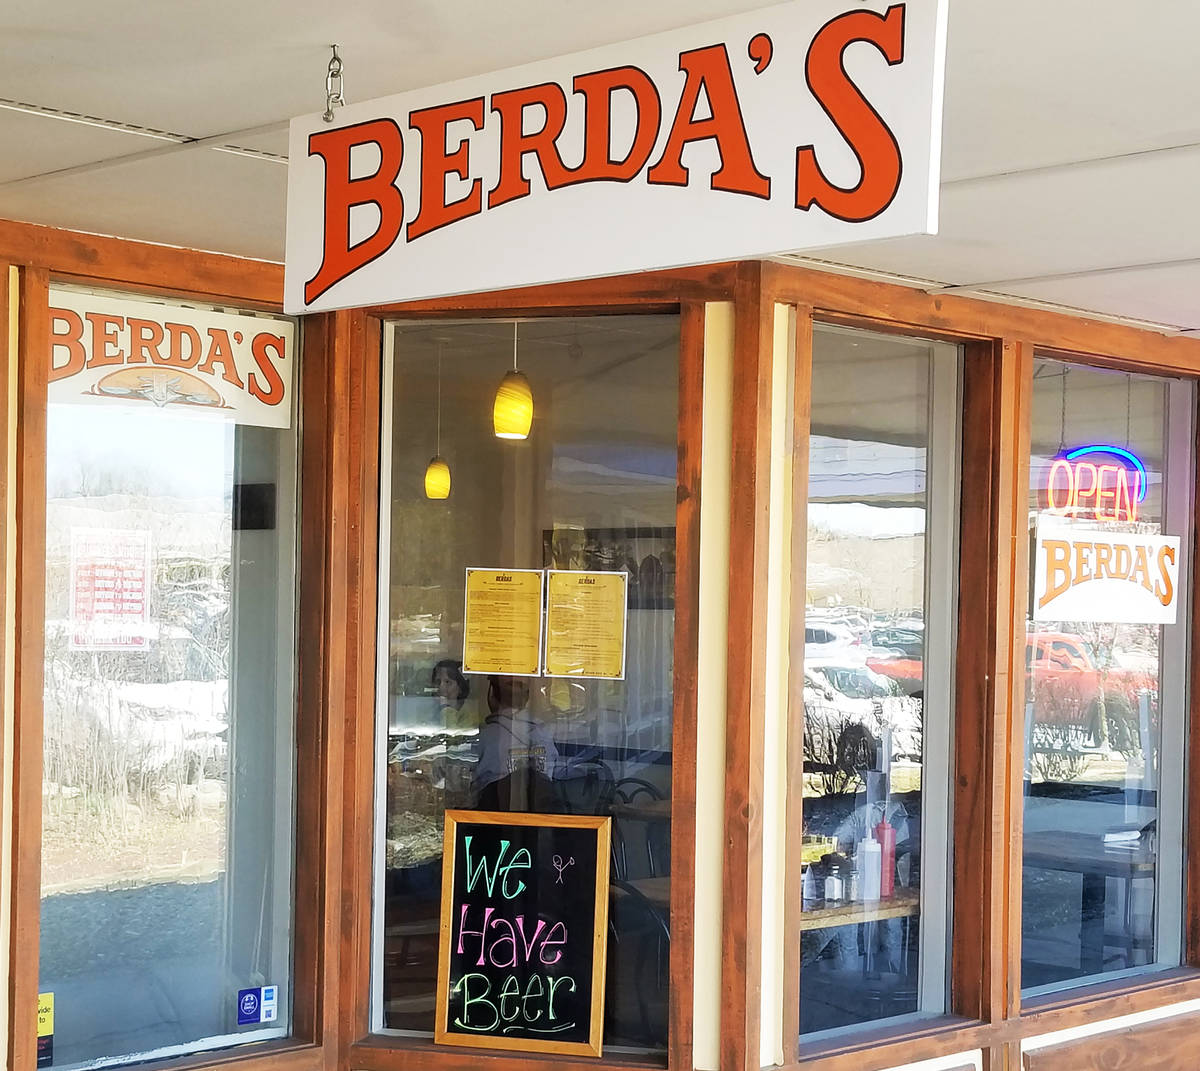 berda's restaurant sign and exterior